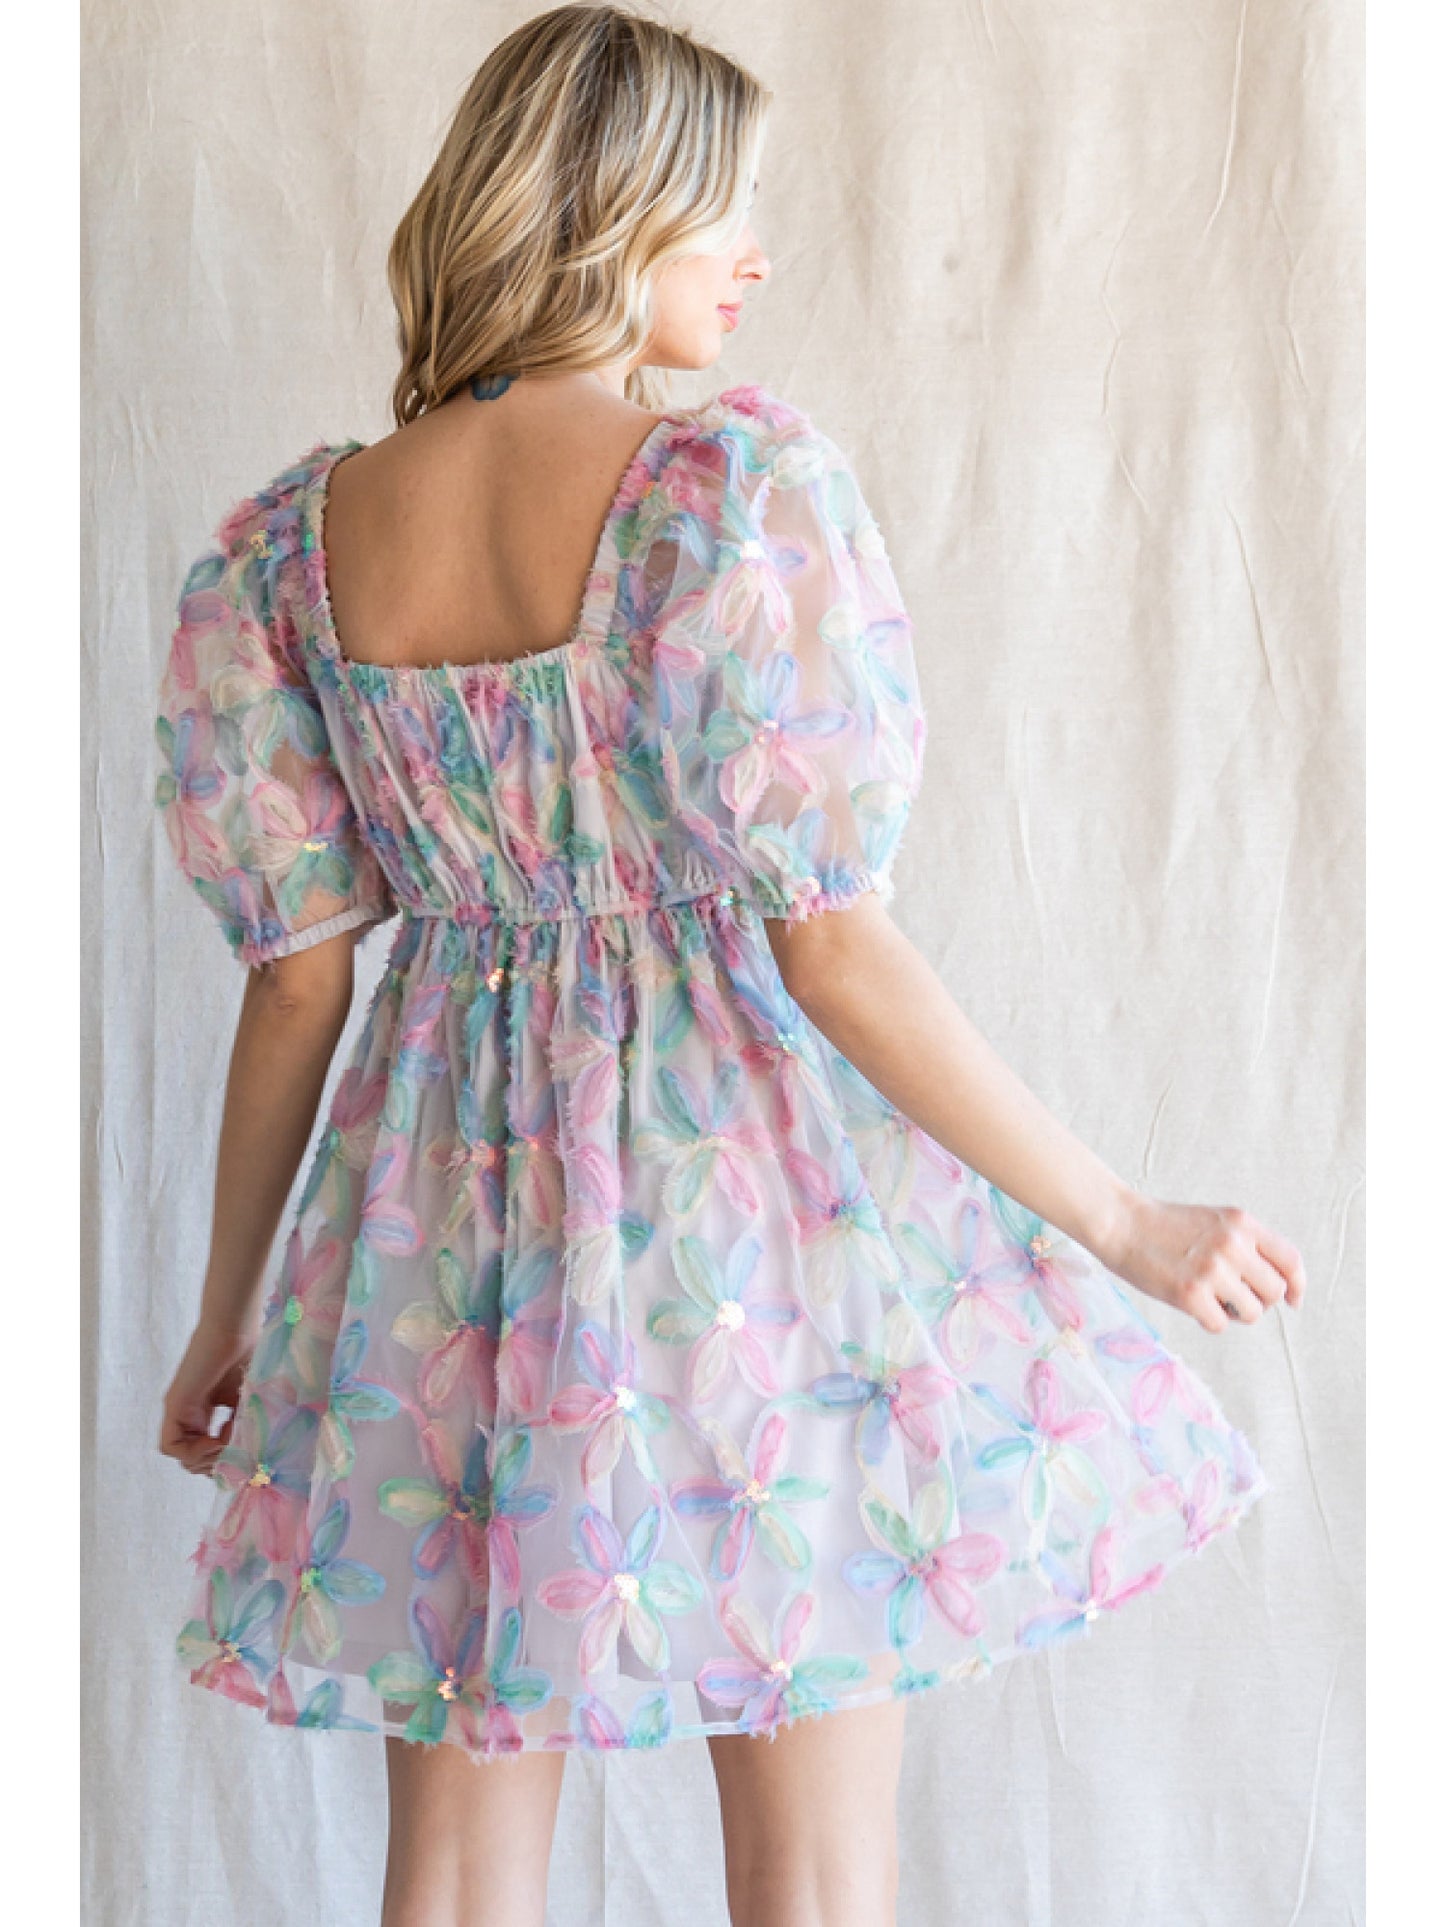 Dusty Lavender Puff Sleeve Mini Dress w/ Multicolor Floral Embellishments